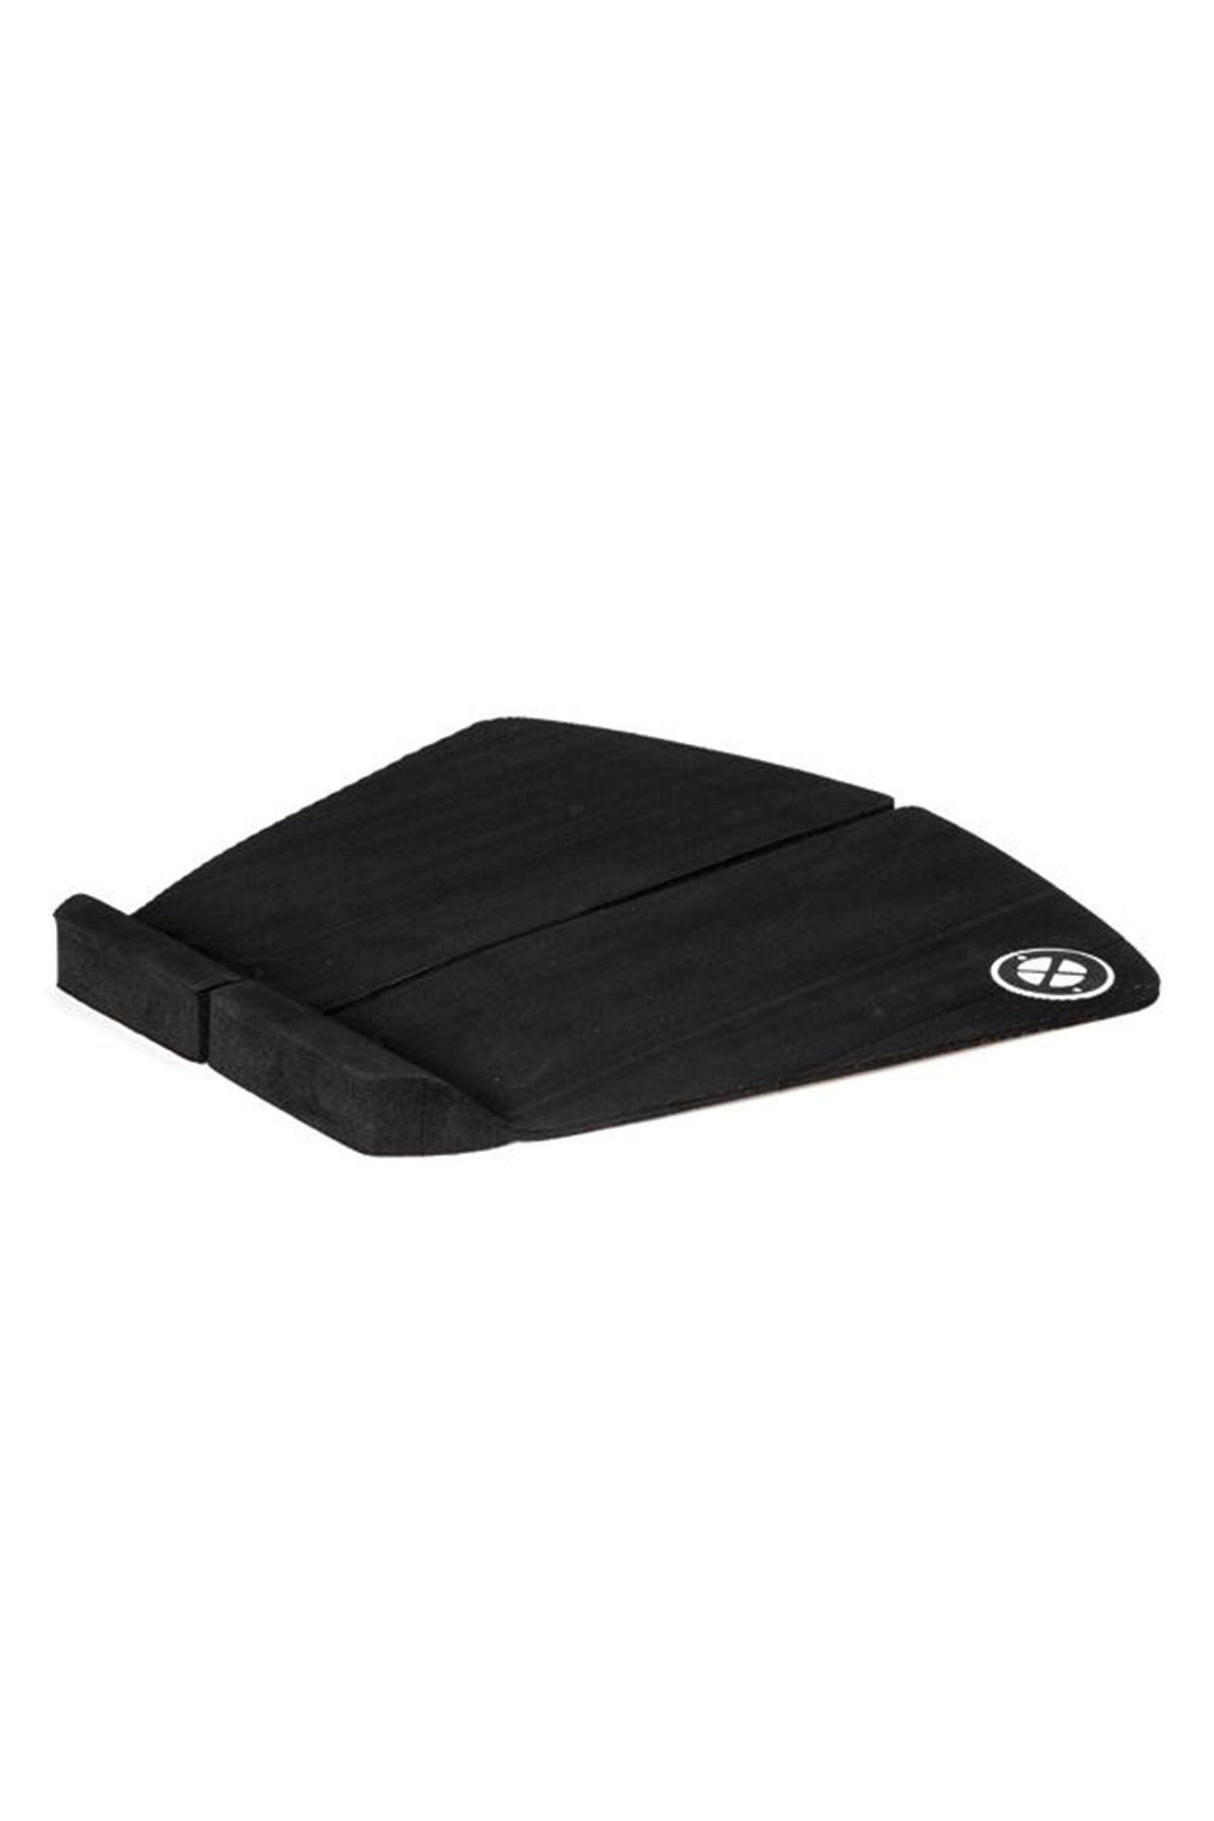 Dreded Grip 2 PC Micro Tail Pad - Black